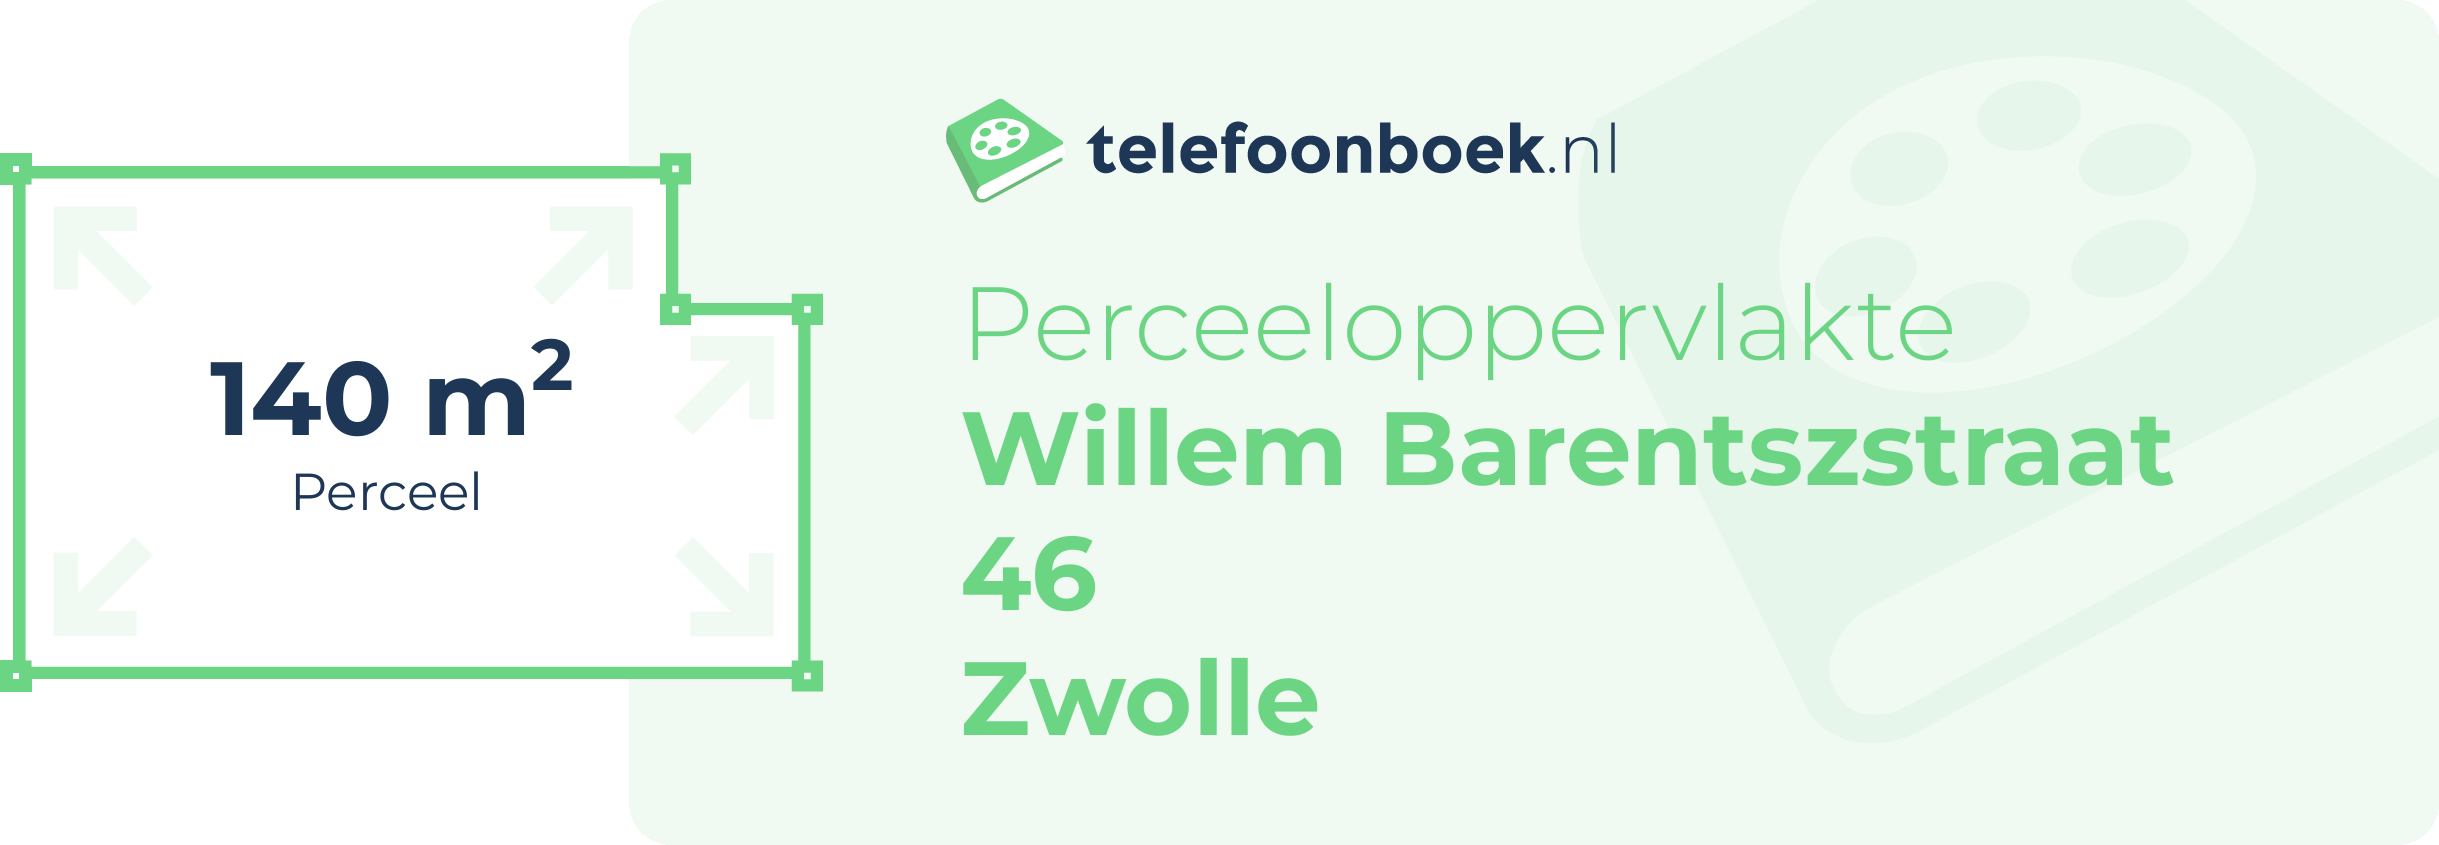 Perceeloppervlakte Willem Barentszstraat 46 Zwolle